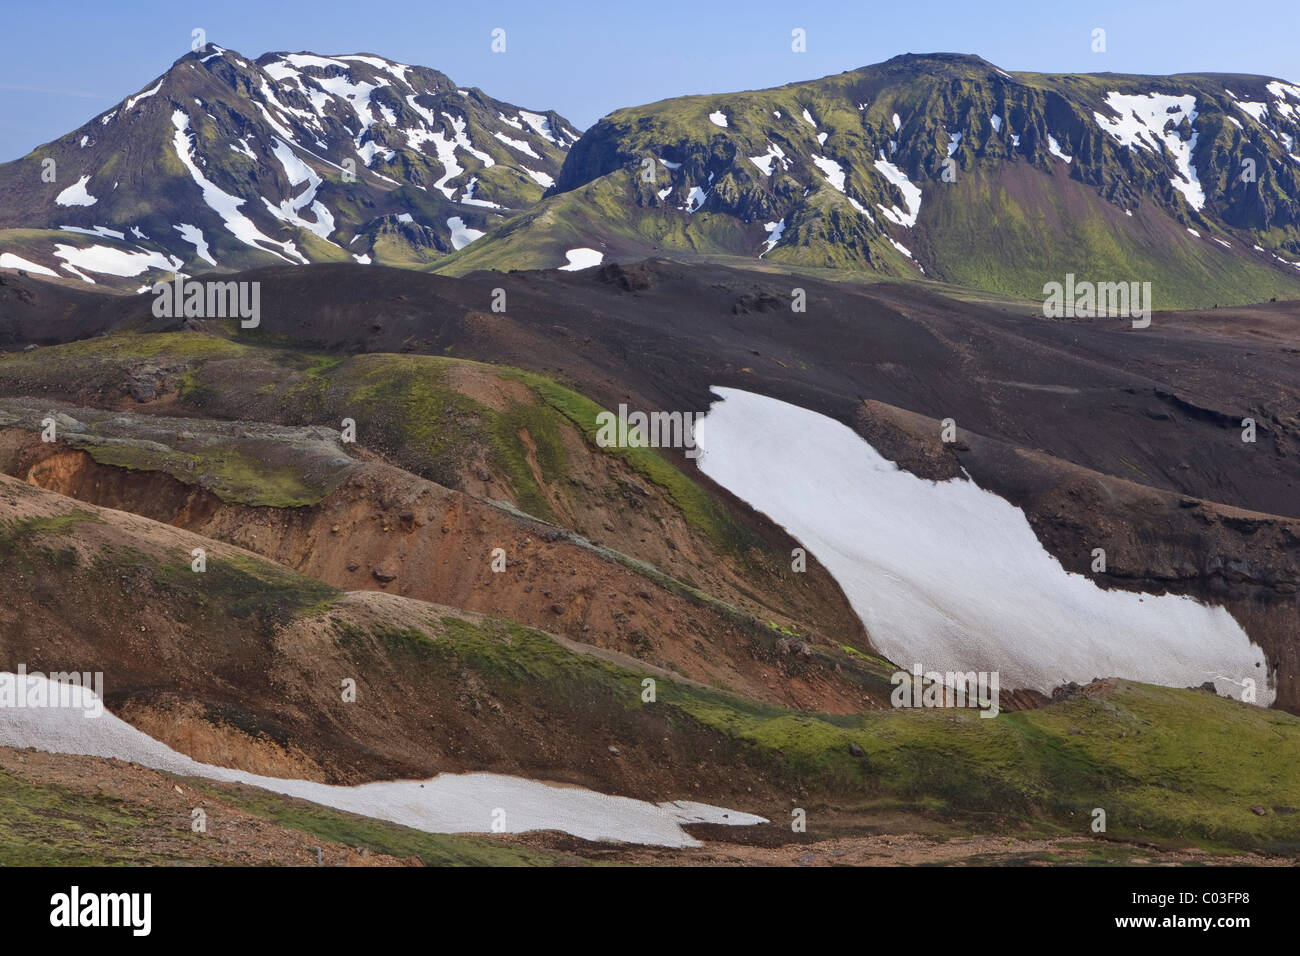 Volcanic landscape with snow fields, Eyjafjallajoekull, Iceland, Europe Stock Photo